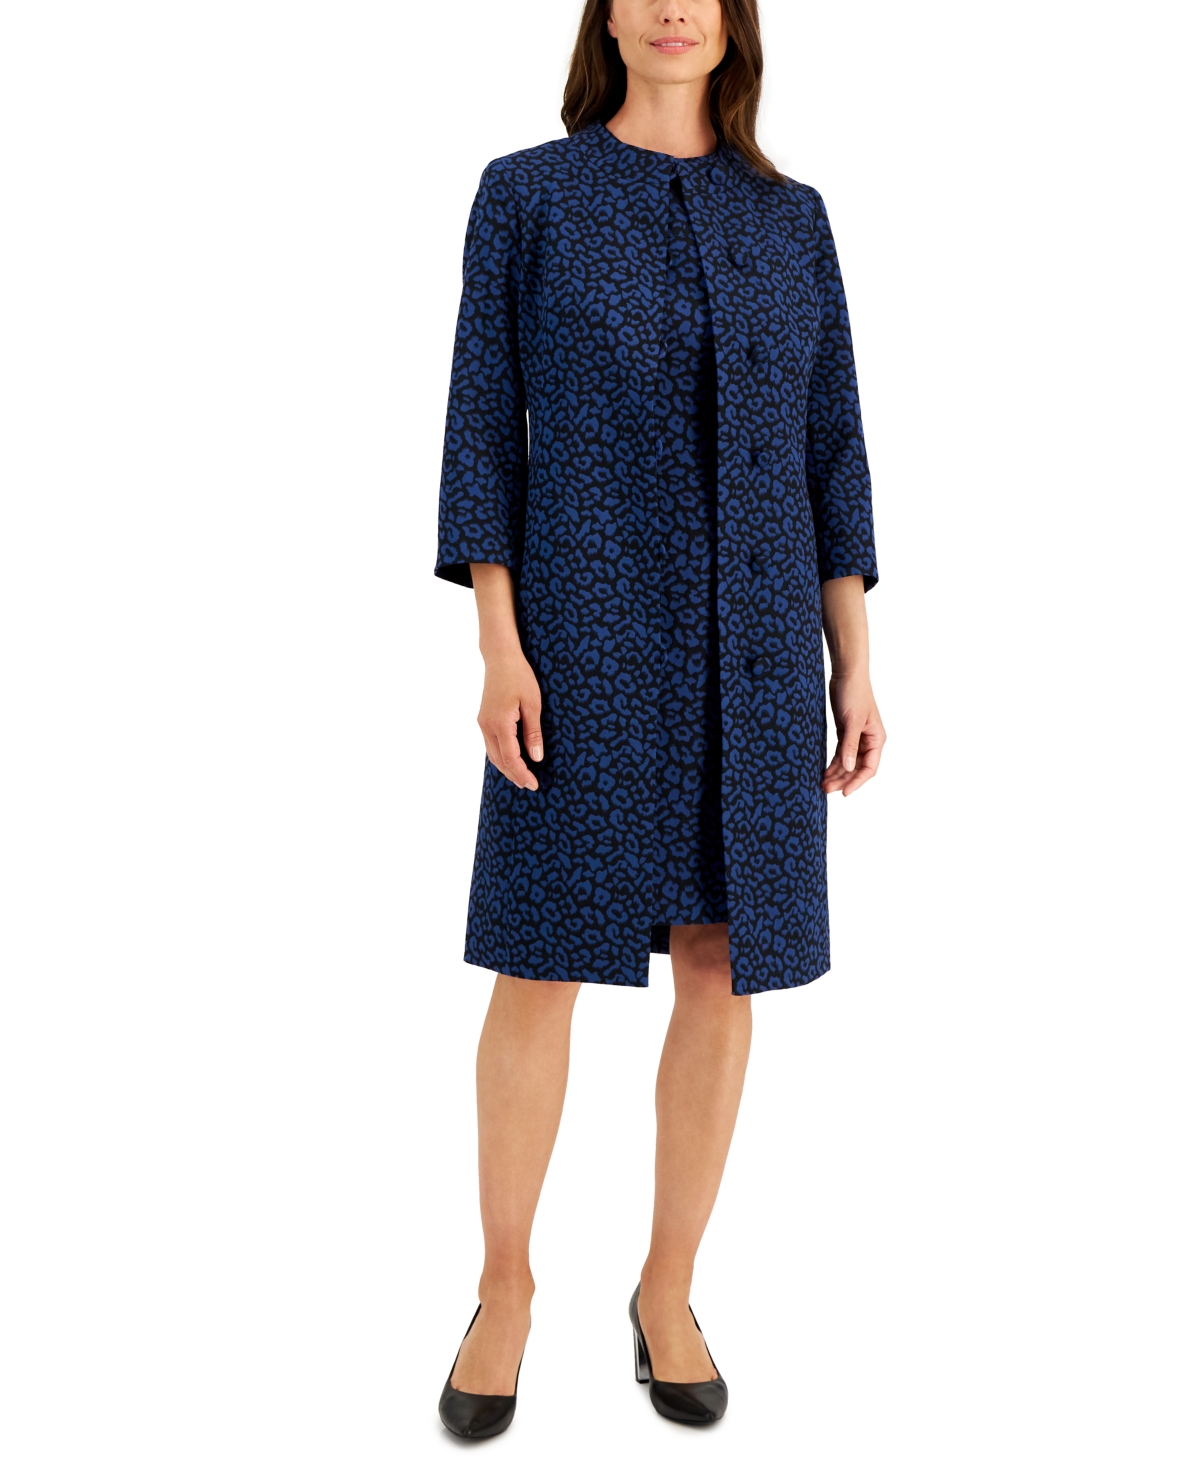 Women's Topper Jacket & Sleeveless Sheath Dress - Blue Quartz/Black